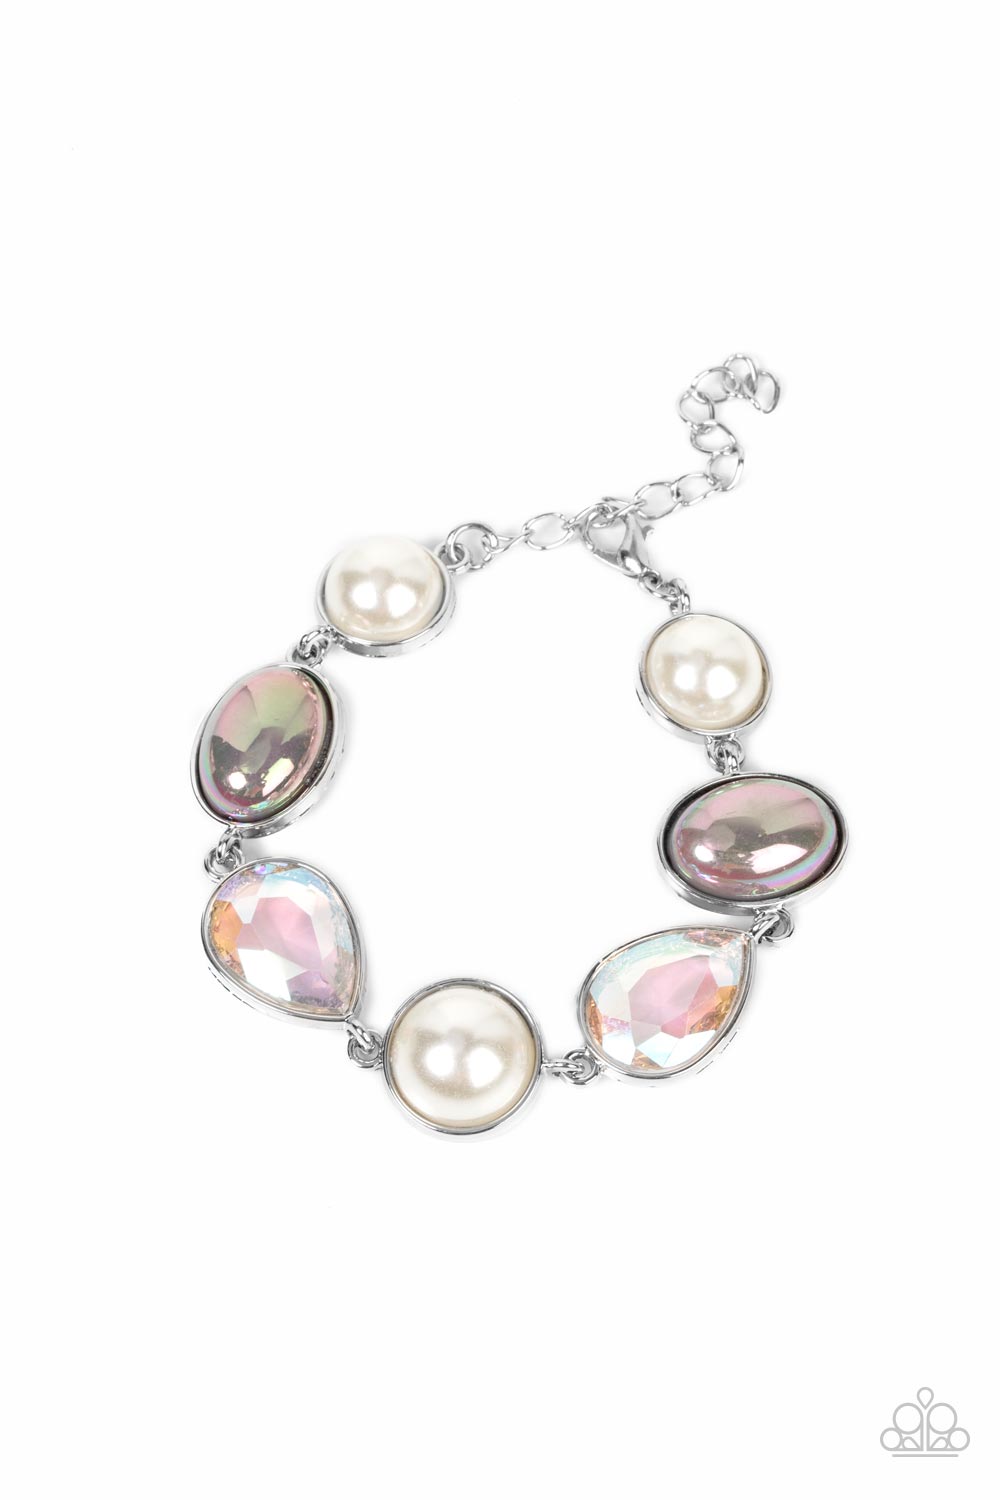 Nautical Nirvana - Silver iridescent necklace w/ matching bracelet